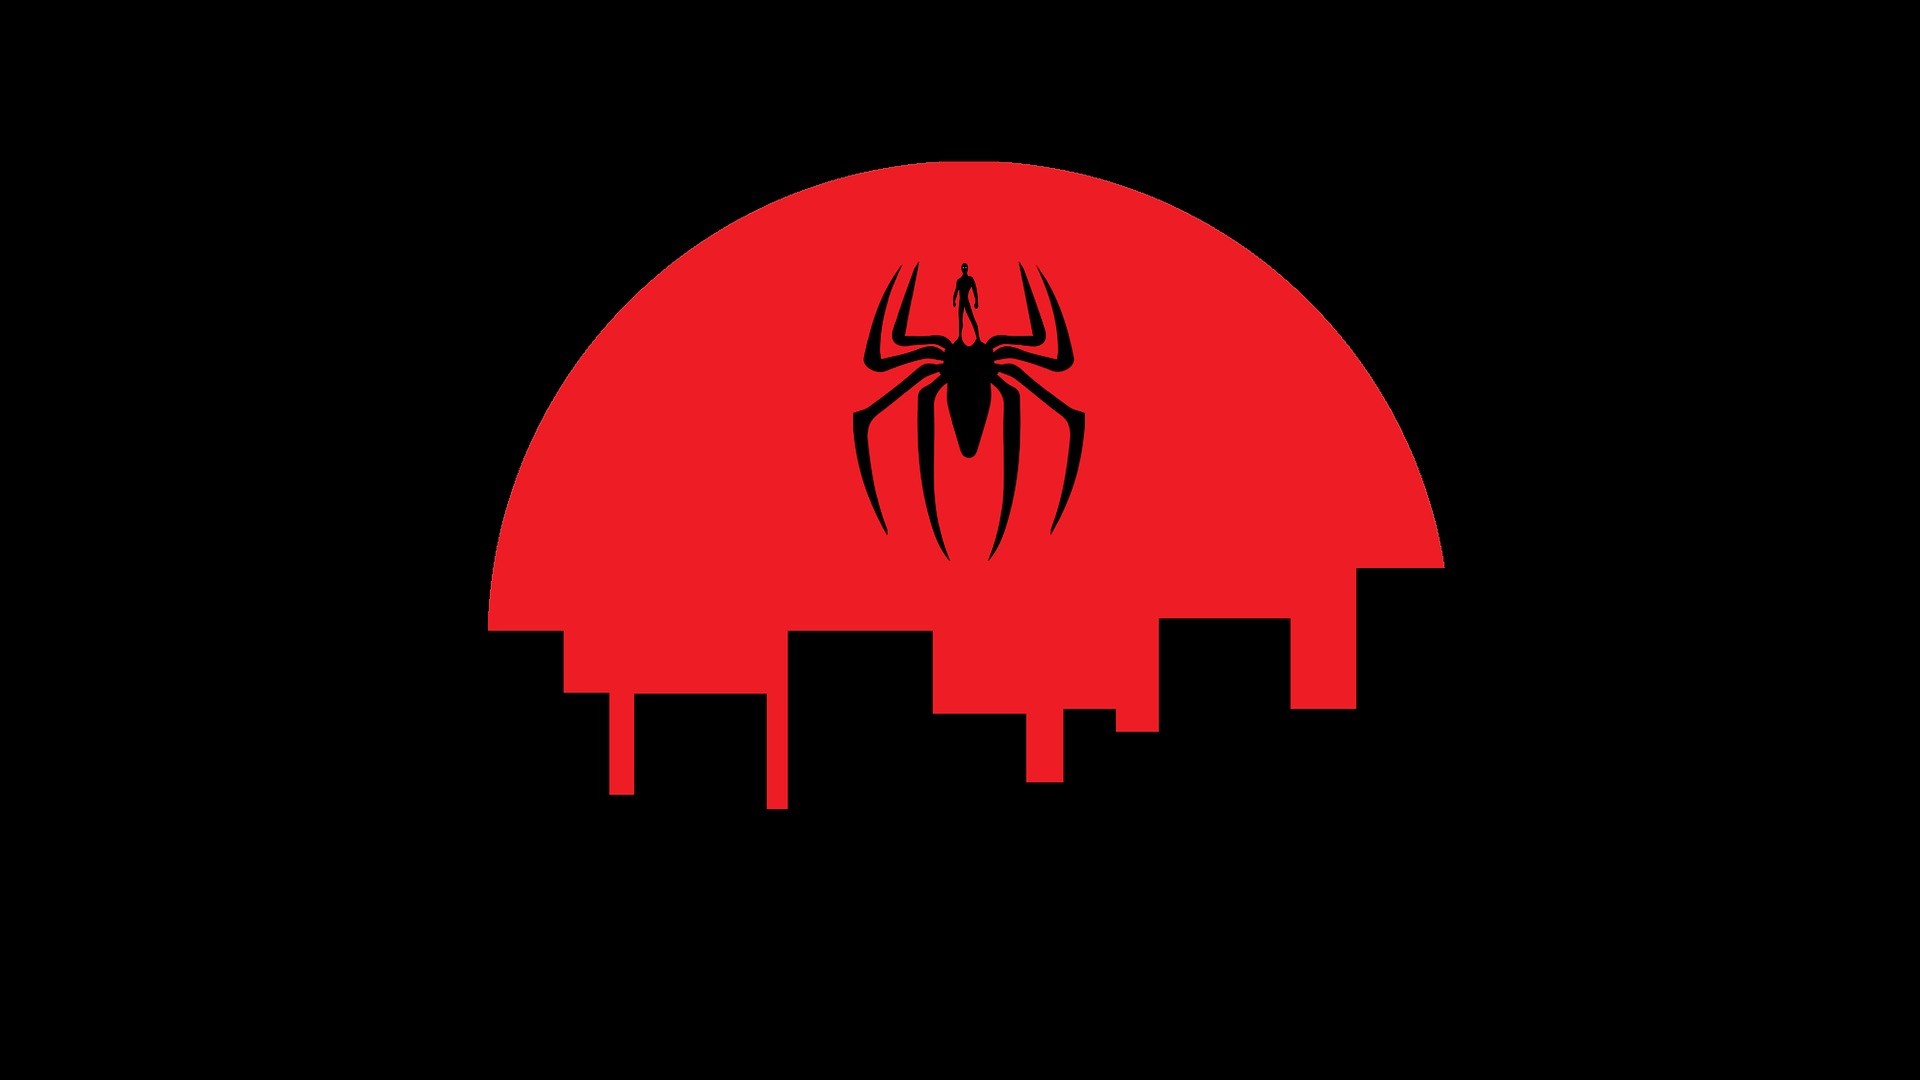 Wallpaper / Spider Man, Marvel Cinematic Universe, Minimalism, Simple Background, Marvel Comics, Logo Free Download